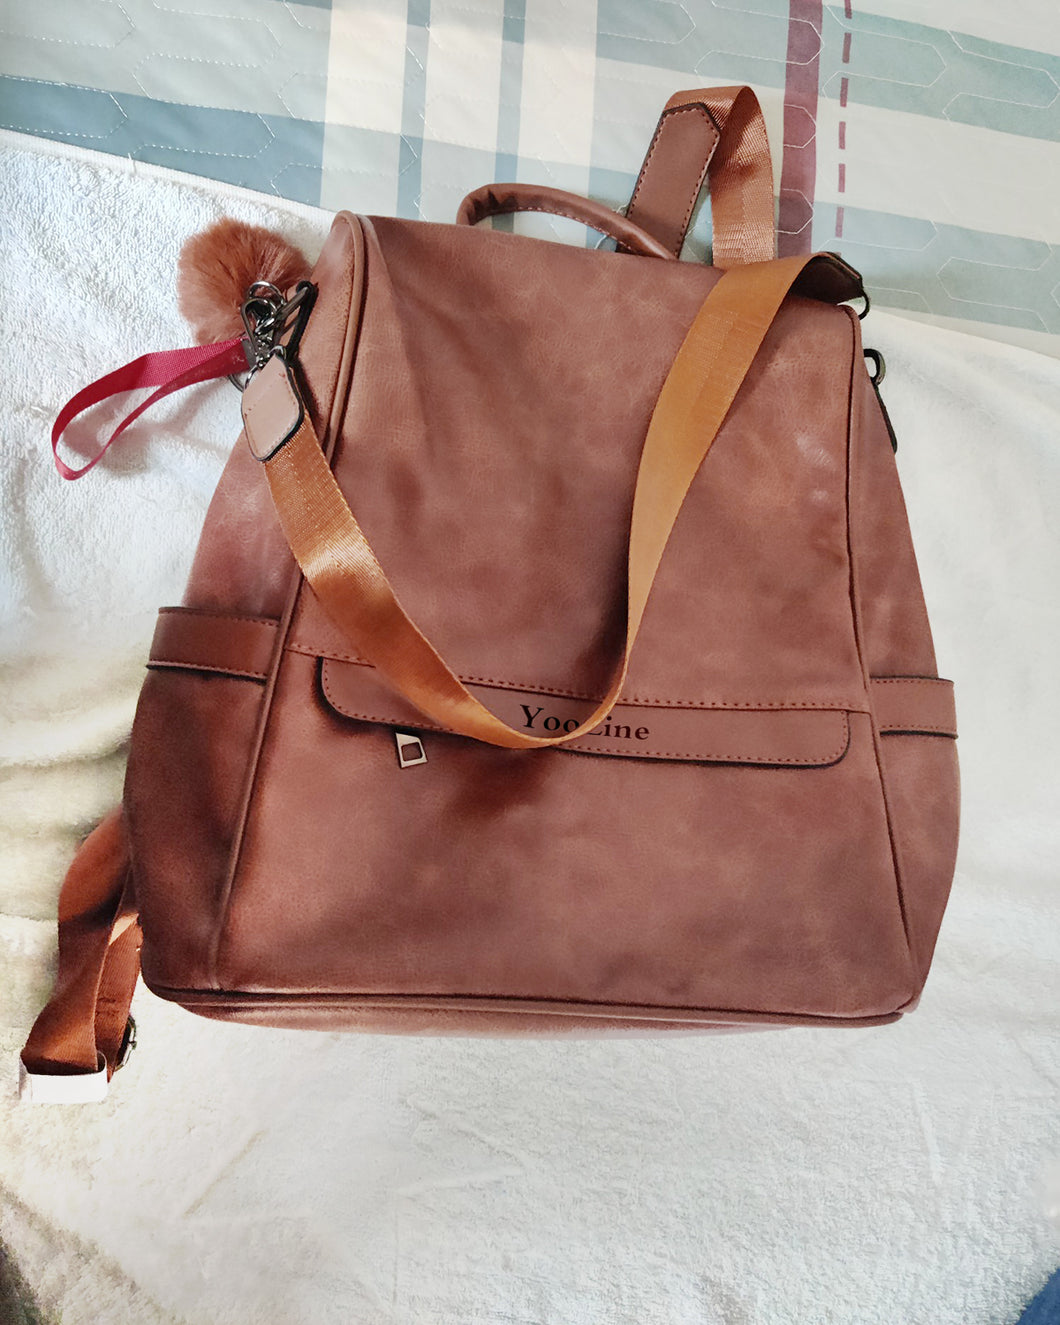 YooLine Genuine Leather Retro Rucksack Backpack College Bag,School Picnic Bag Travel